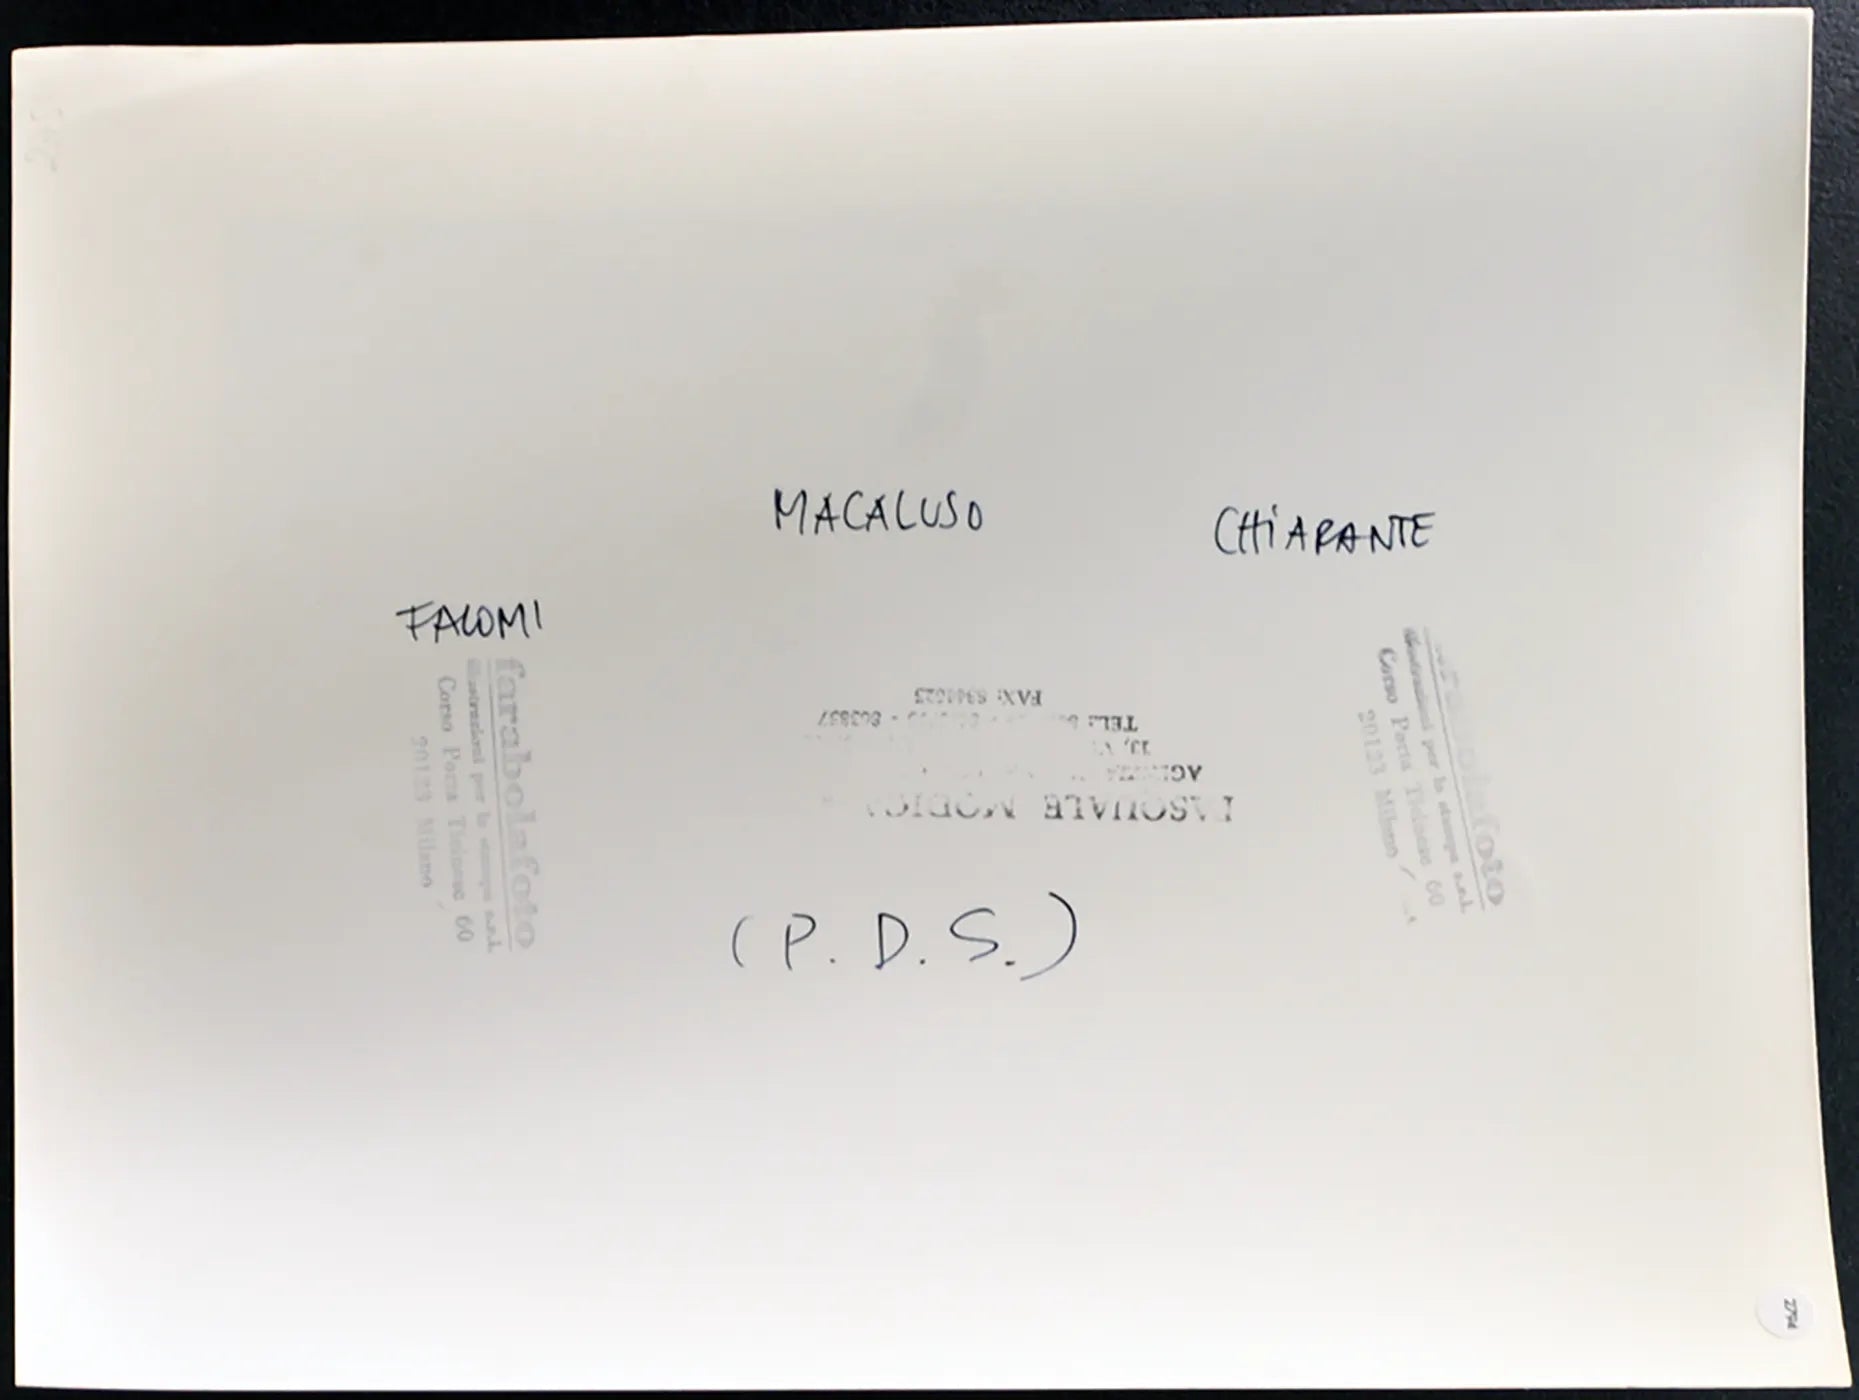 Falomi, Macaluso, Chiarante PDS anni 90 Ft 2794 - Stampa 24x30 cm - Farabola Stampa ai sali d'argento